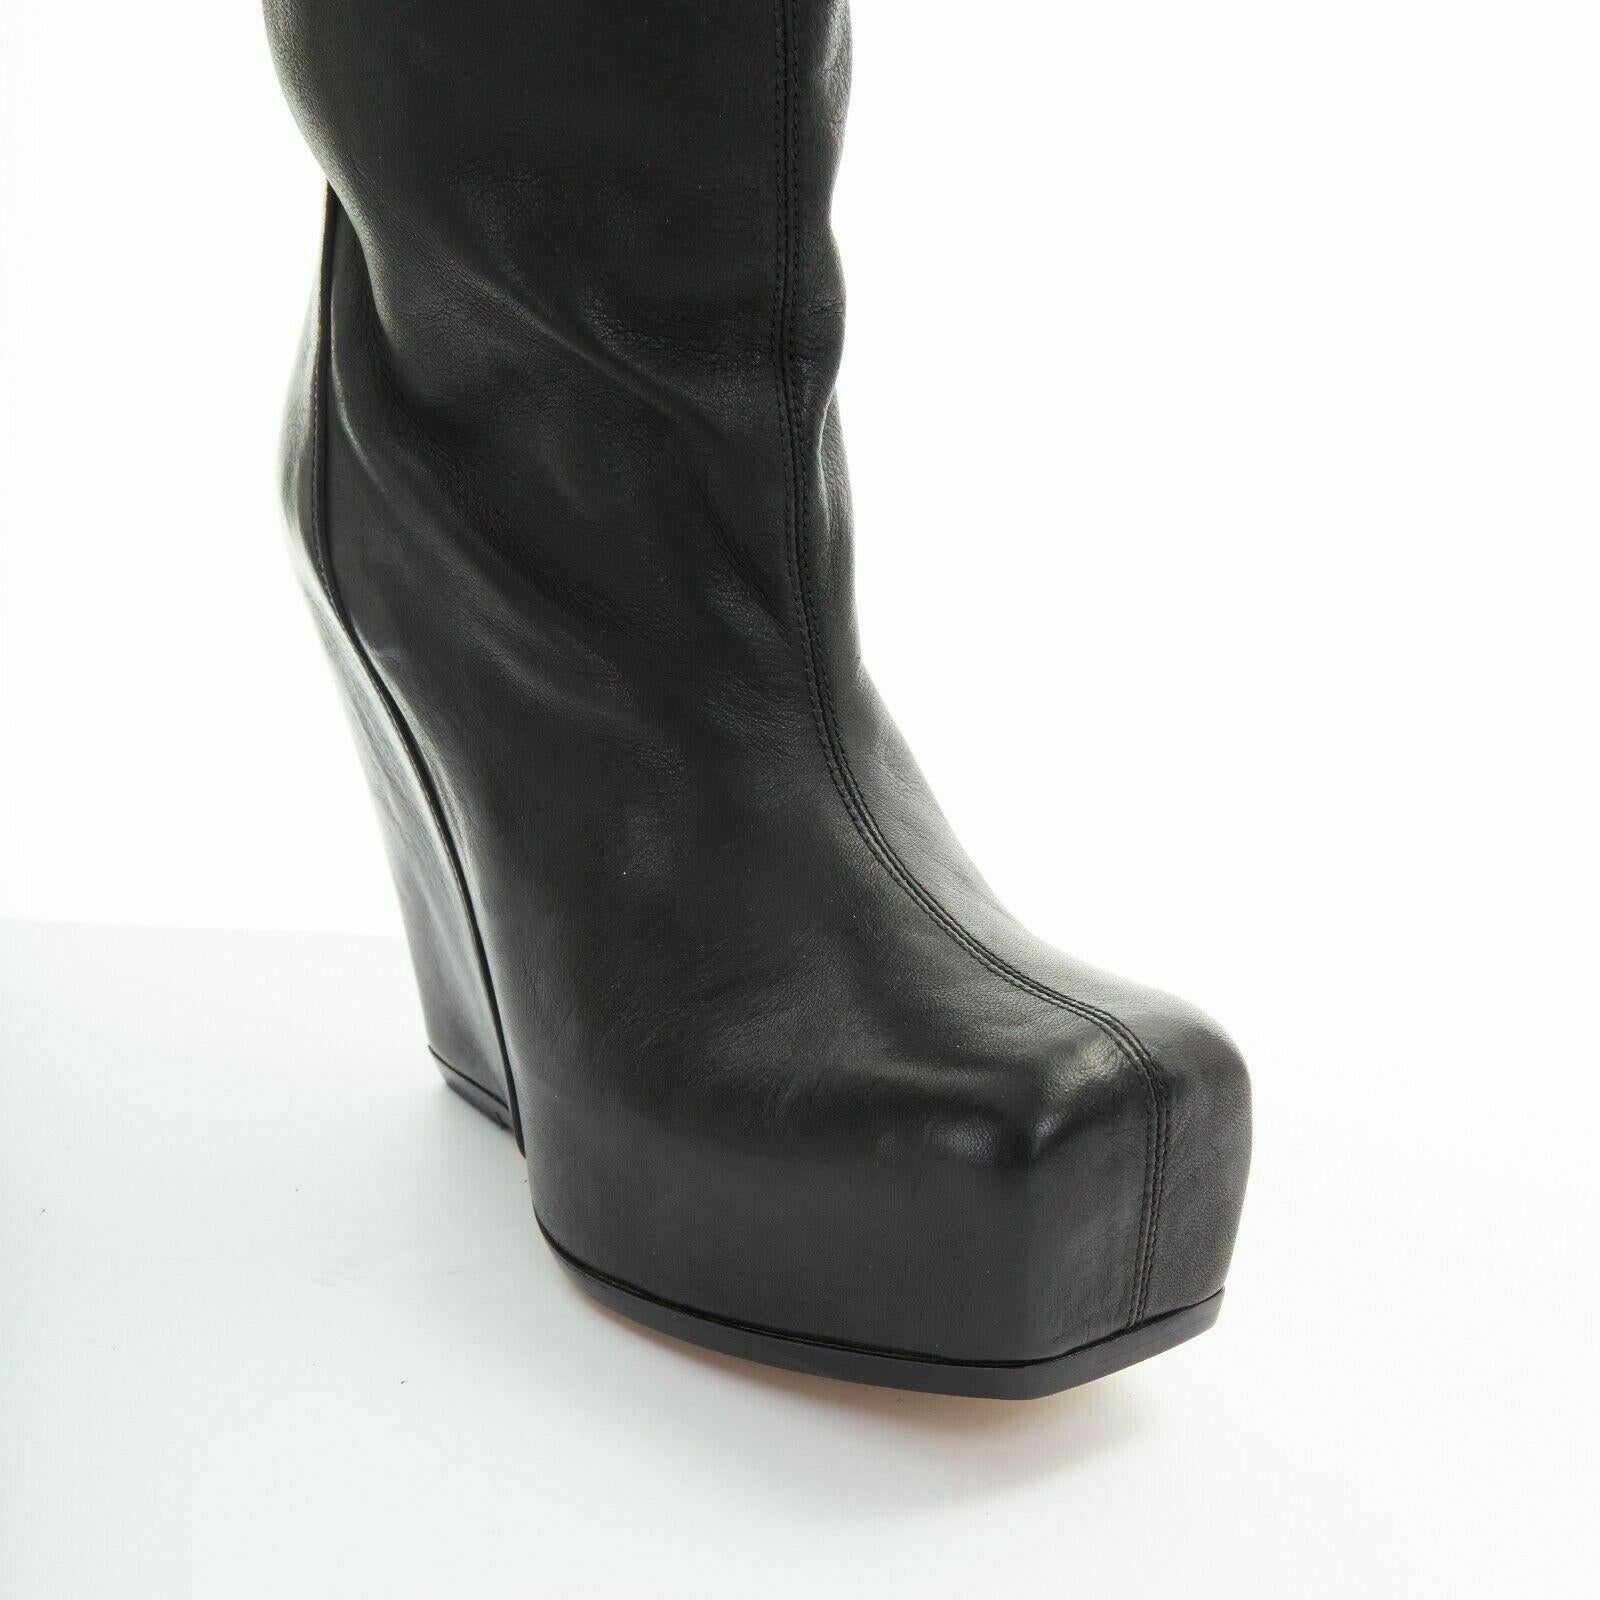 Women's new RICK OWENS black leather square toe platform wedge knee high OTK boots EU36